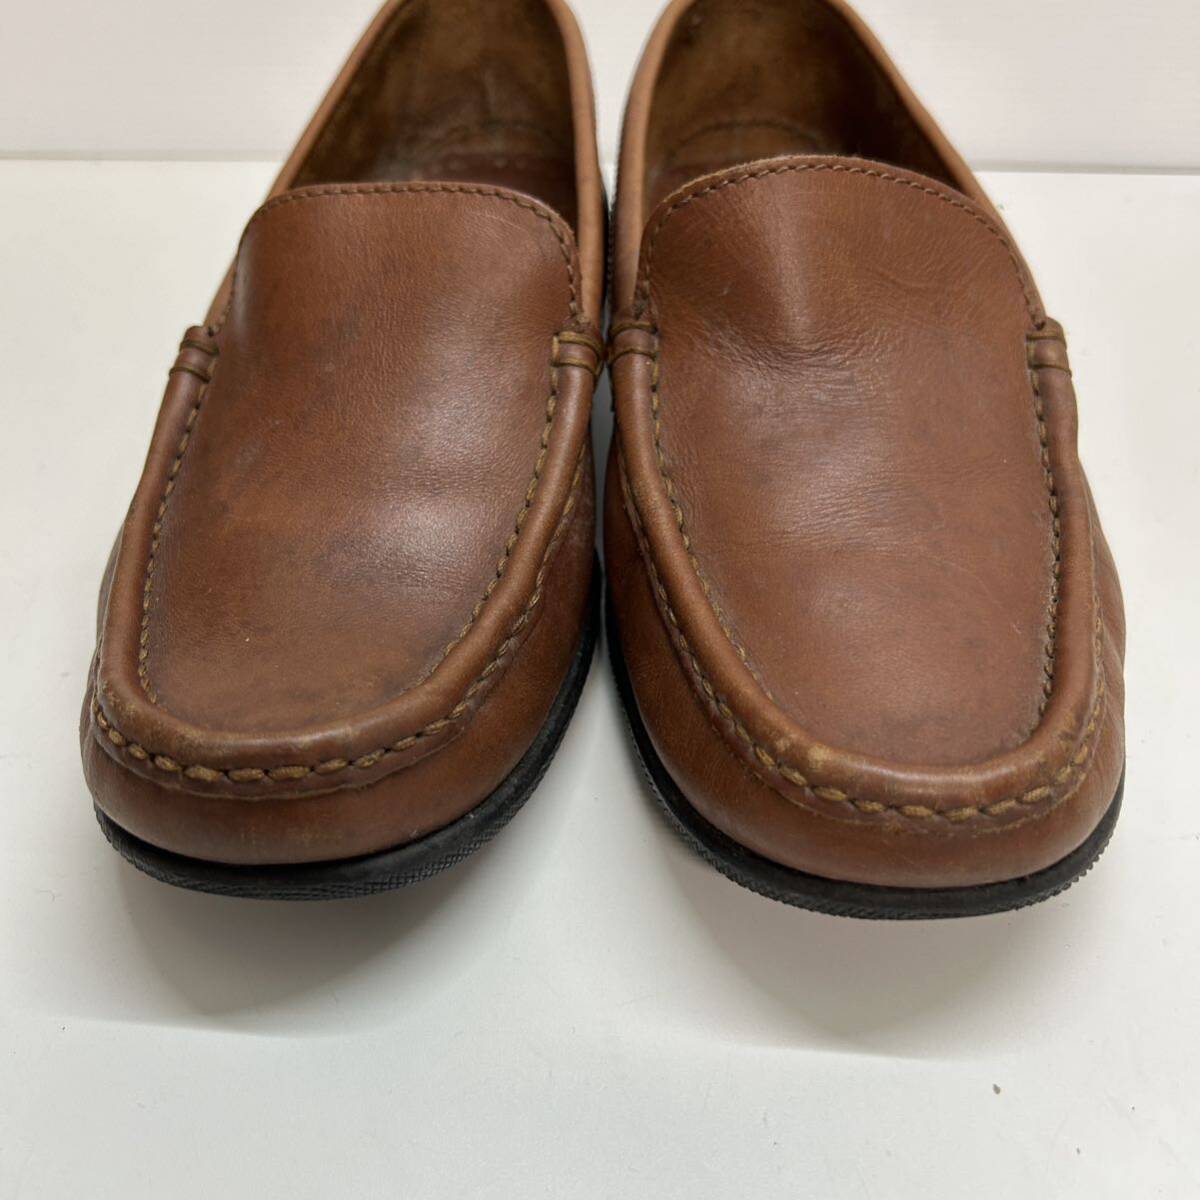 C386 REGAL Reagal men's Loafer business shoes slip-on shoes 24cm Brown leather 